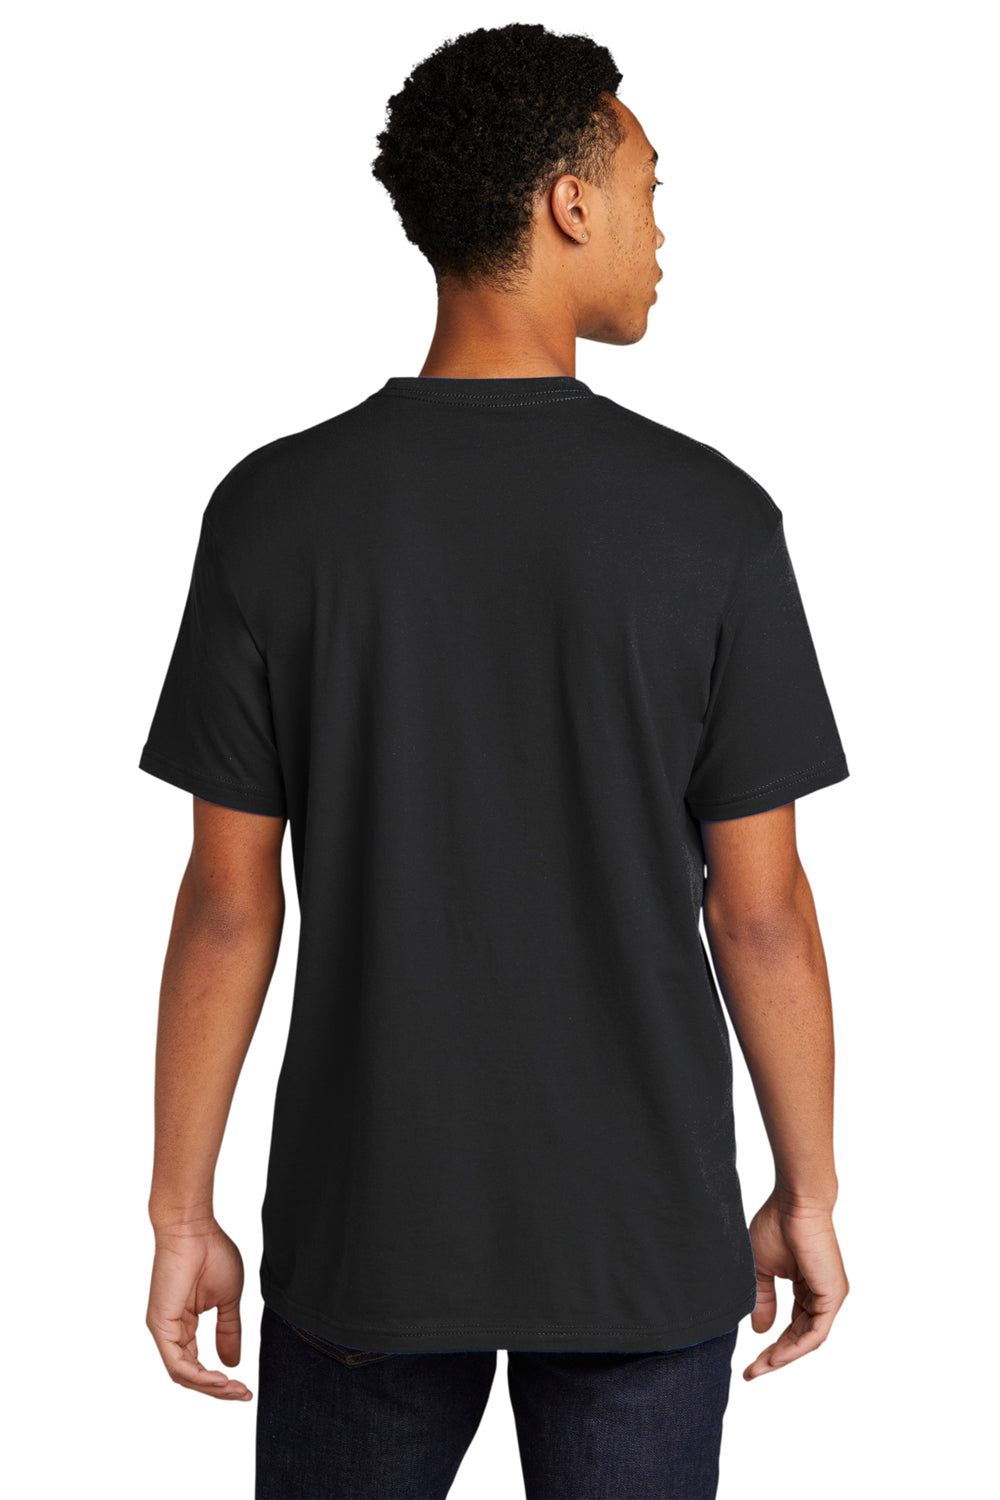 Next Level NL3600/3600 Mens Fine Jersey Short Sleeve Crewneck T-Shirt Graphite Black Back